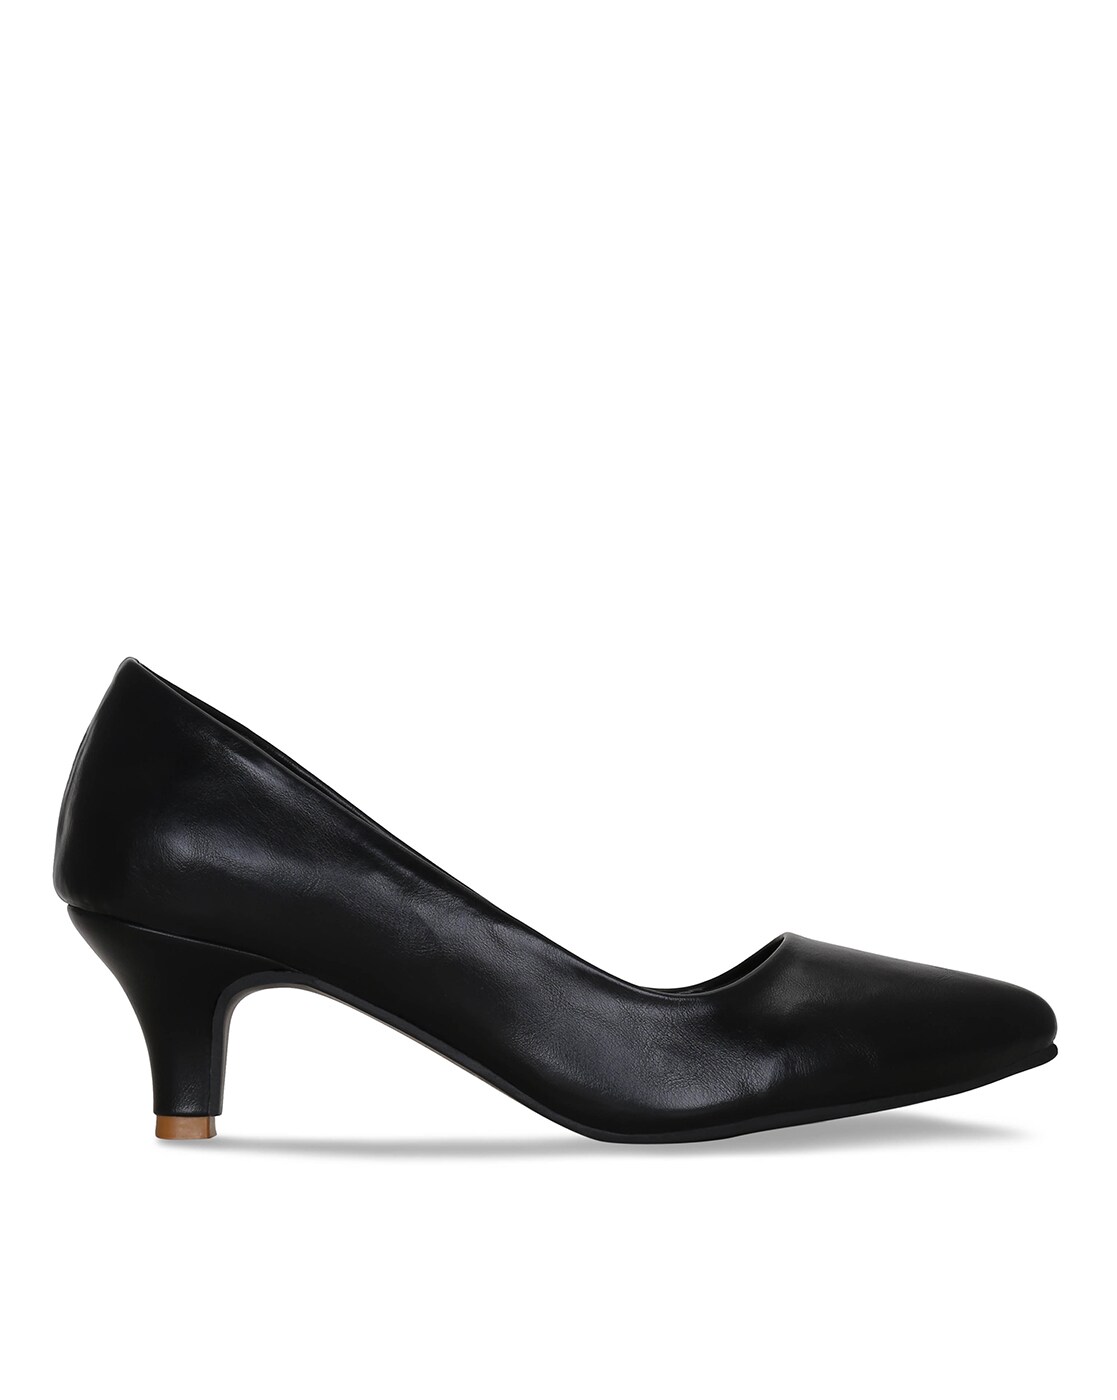 Black Low Heel Dress Shoes for Women MA-024 - RUBRICA SHOES